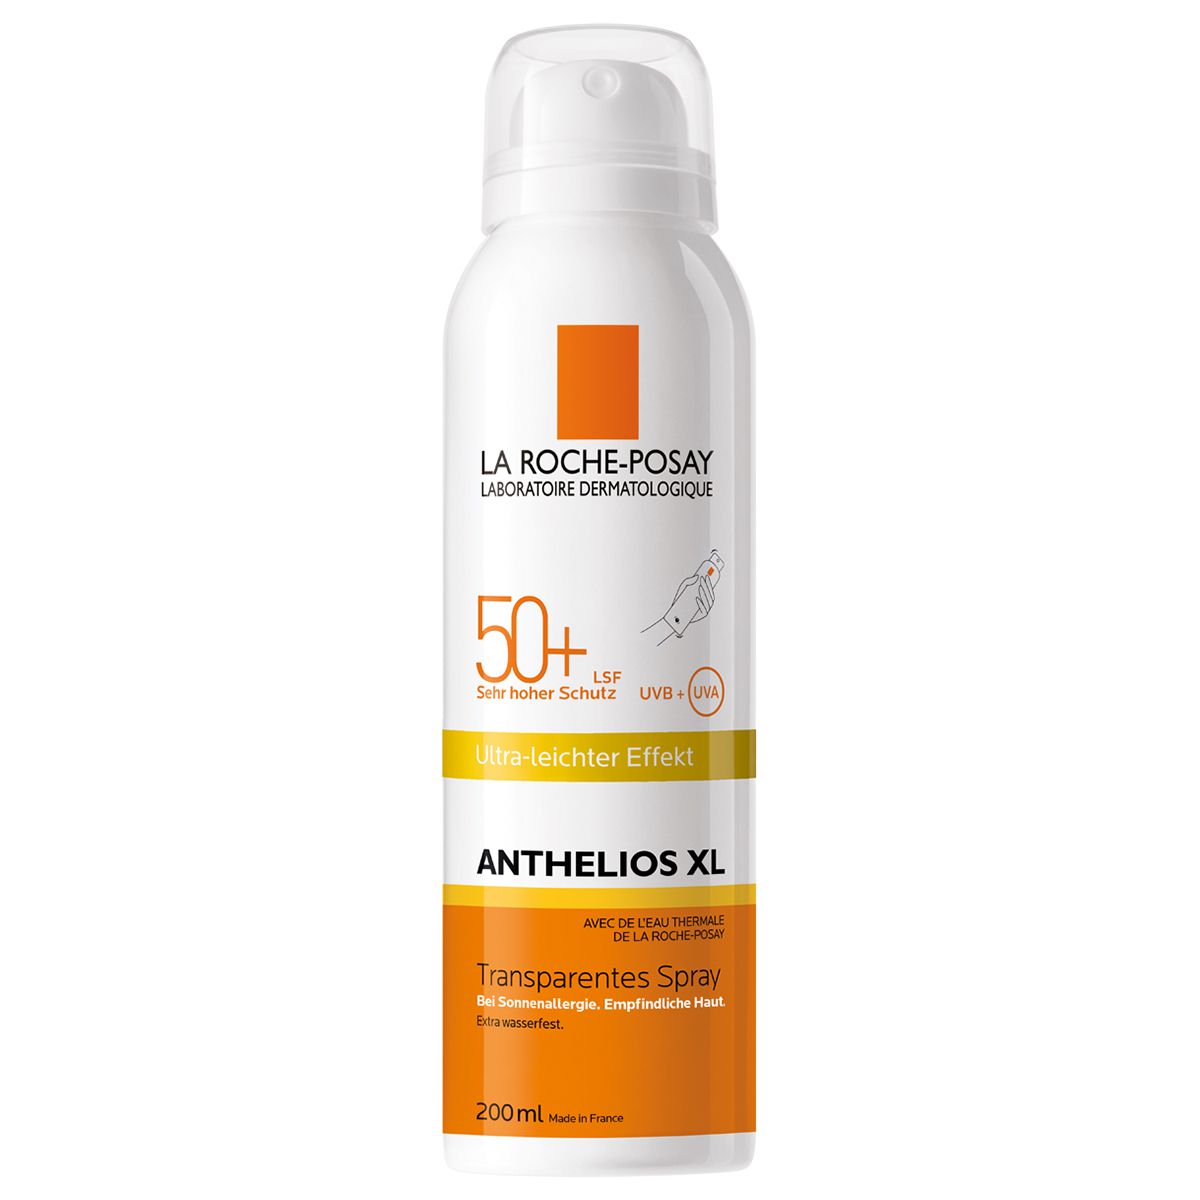 LA ROCHE-POSAY Anthelios XL LSF 50+ transp.Spray